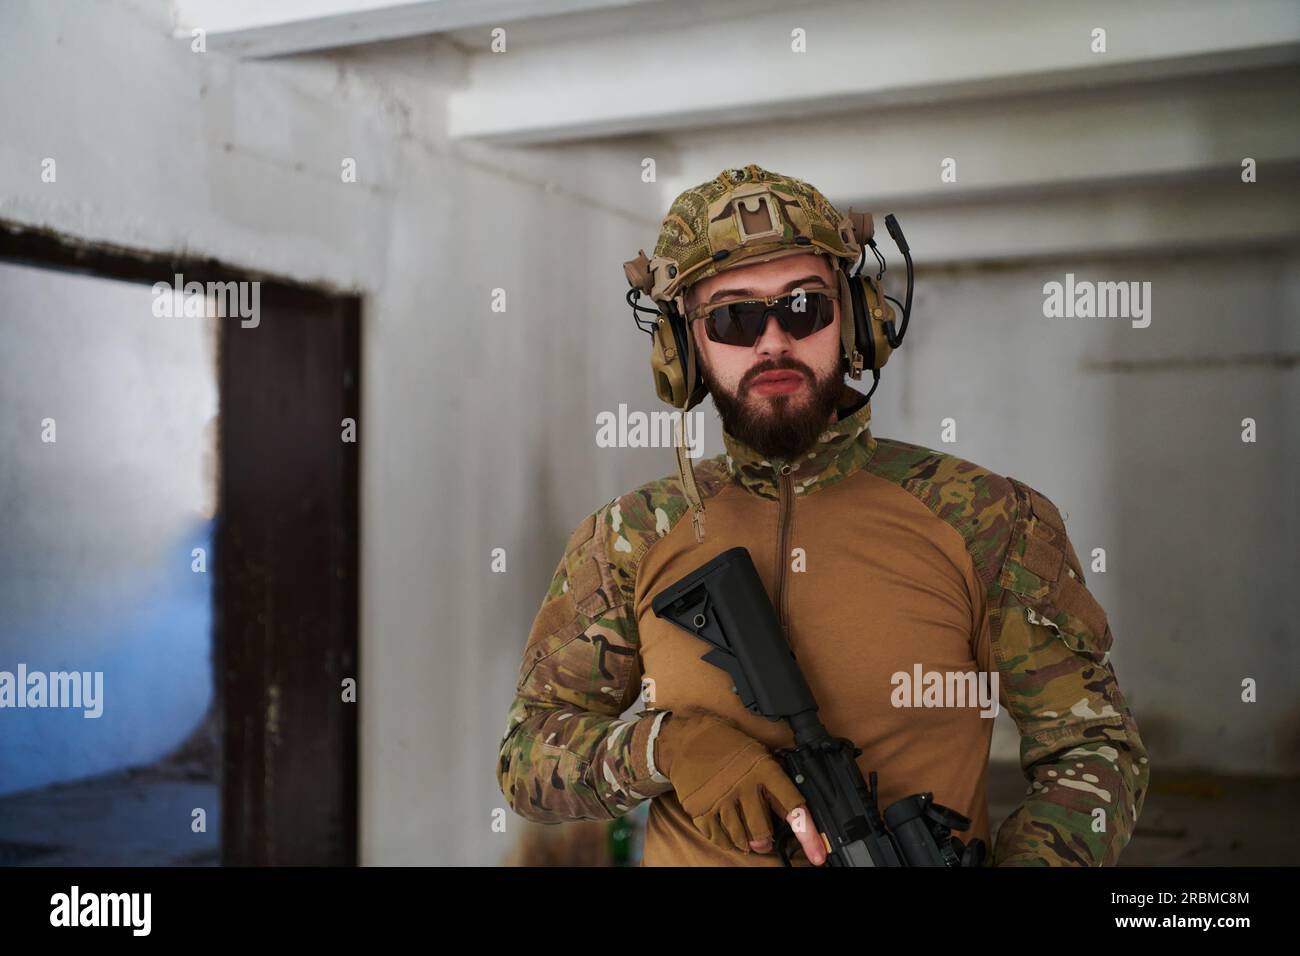 Modern warfare soldier portrait in urban environment Stock Photo